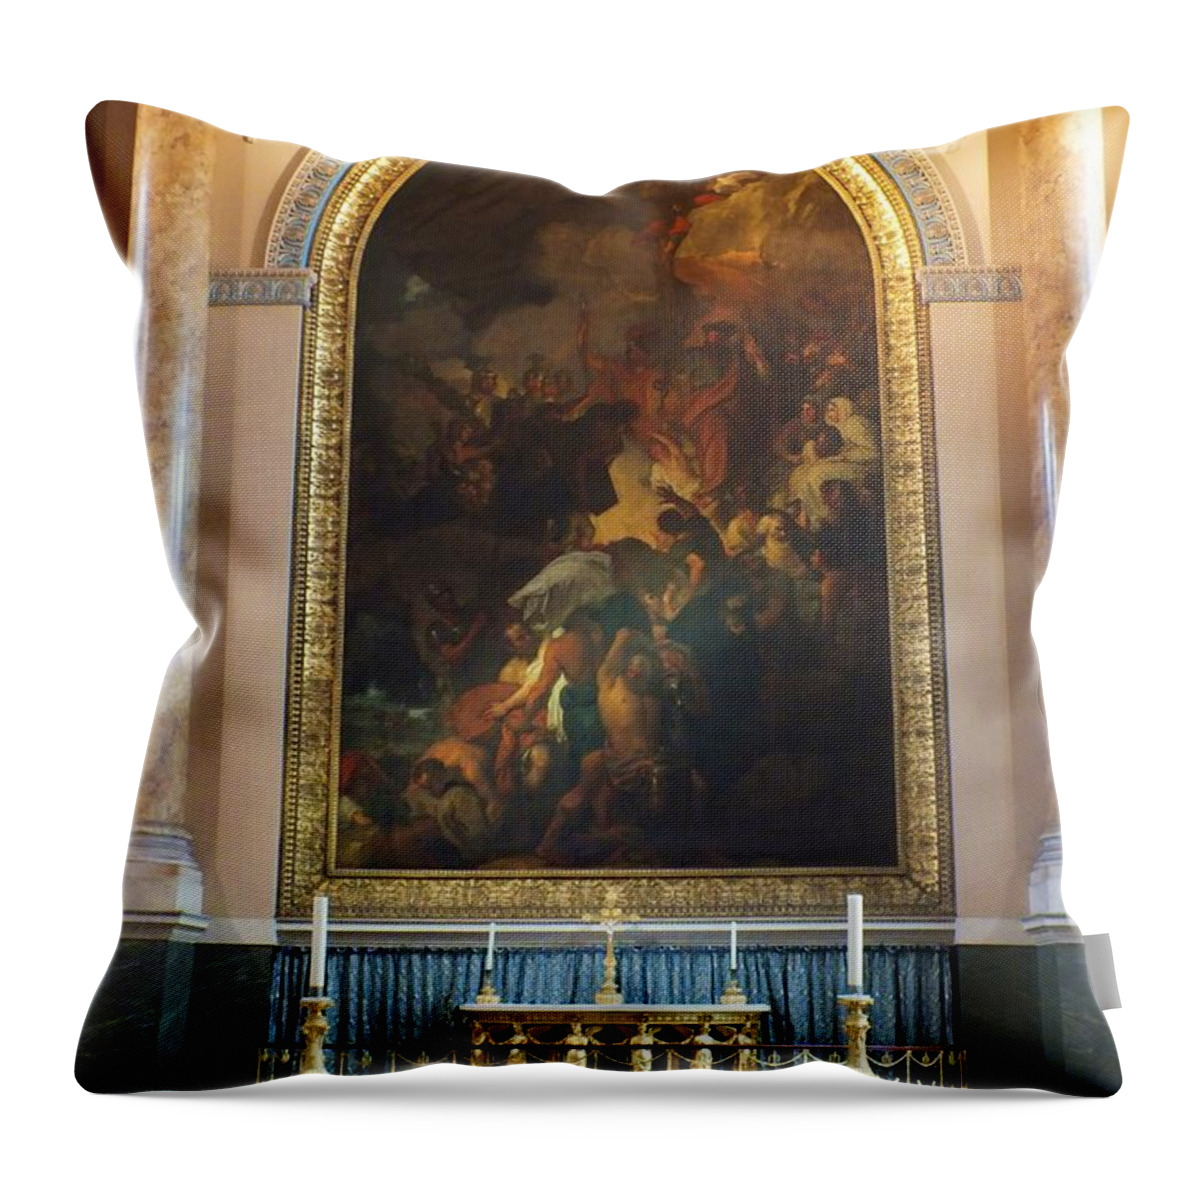 Royal Naval Chapel Throw Pillow featuring the photograph Royal Naval Chapel Interior by Anna Villarreal Garbis